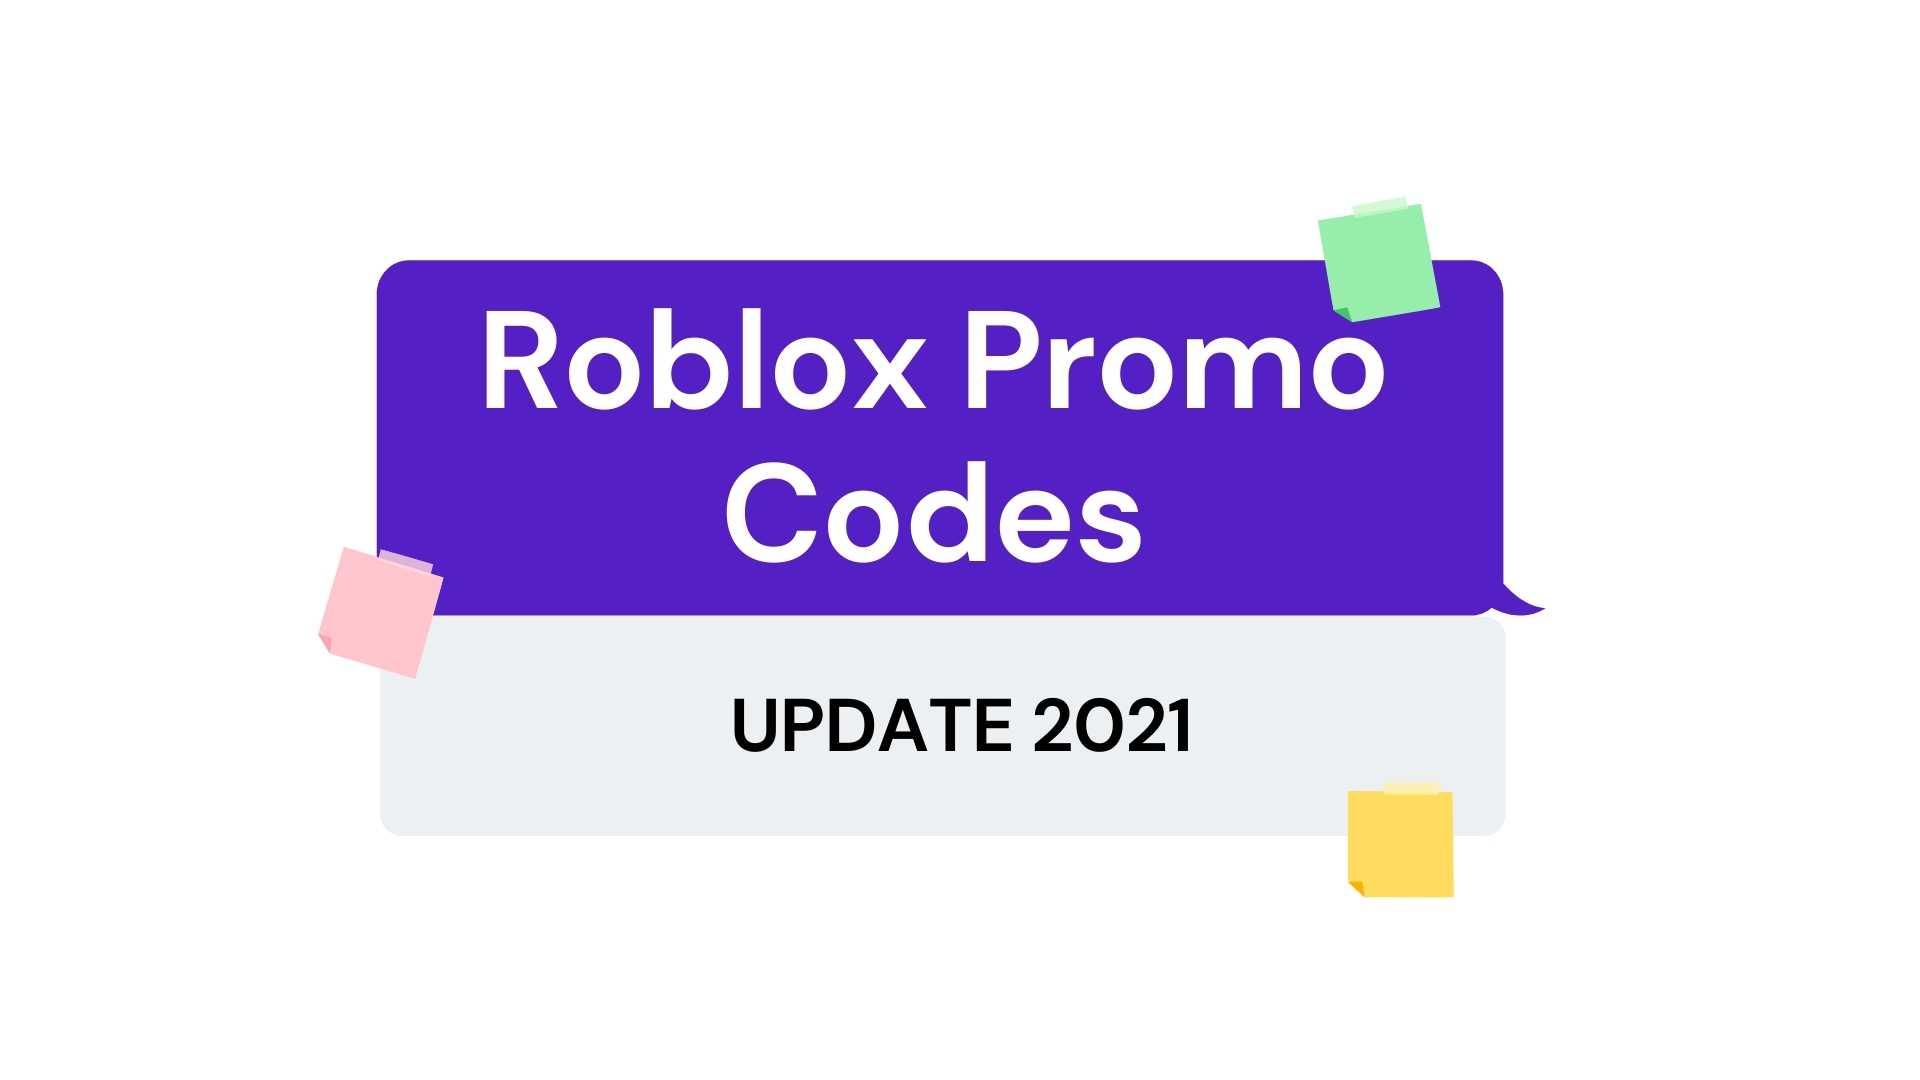 Roblox Promo Codes Discount Codes Full List June 2021 Salusdigital - roblox pants codes 2021